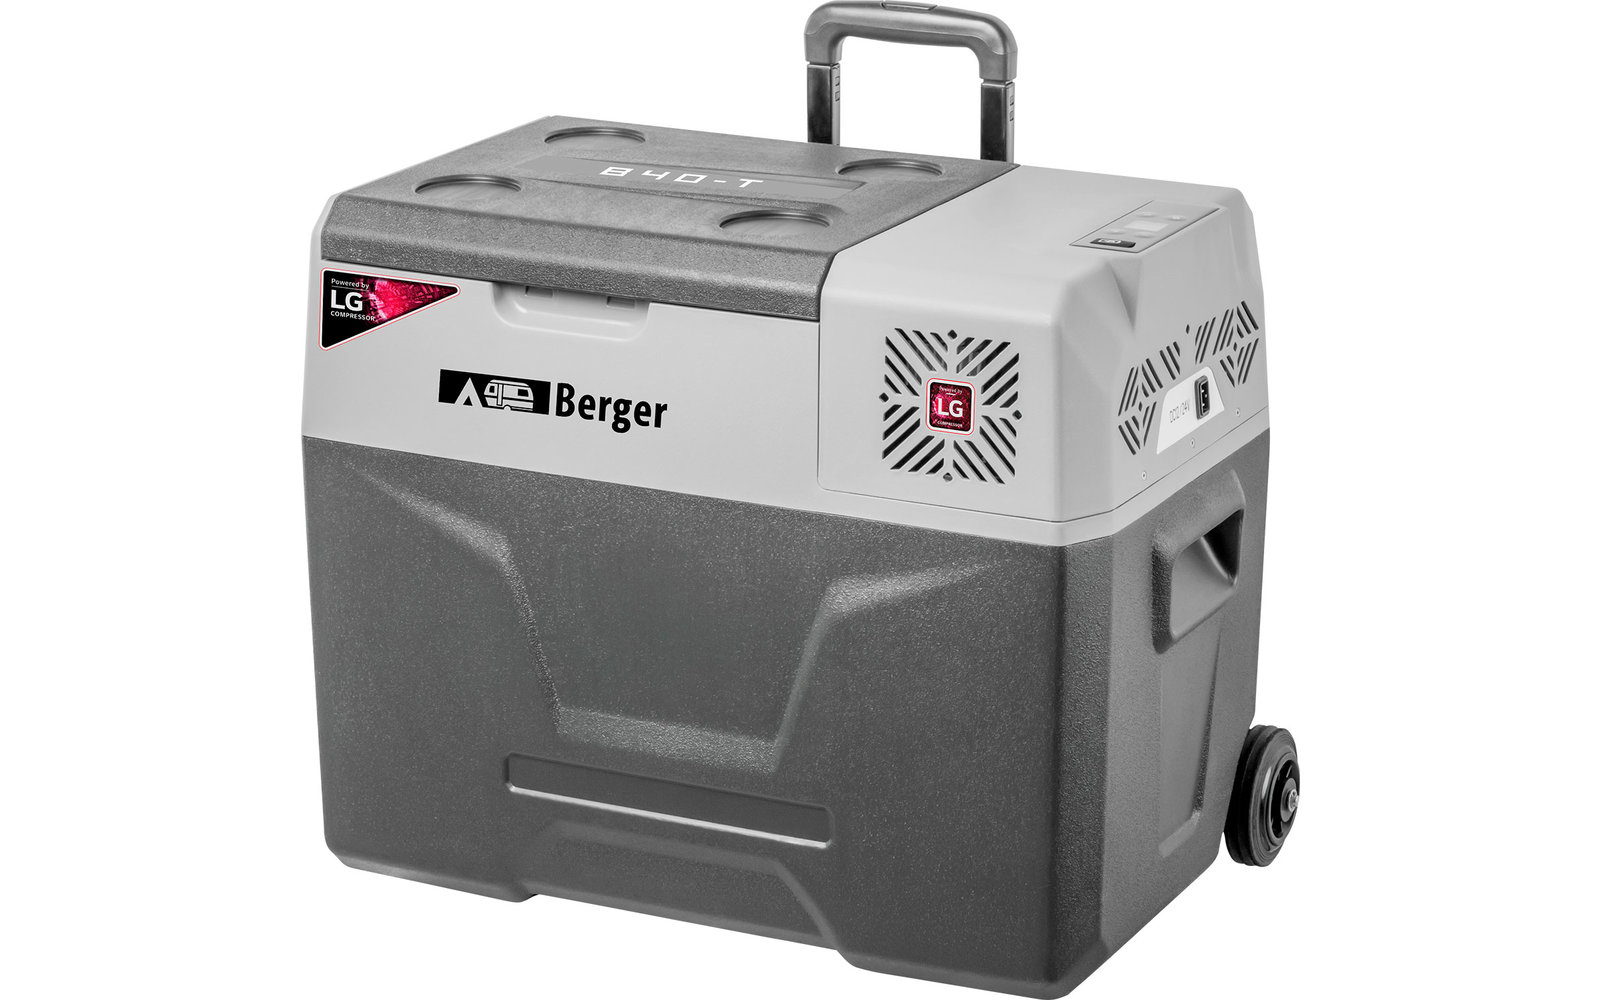 Berger MCX Kompressor Kühlbox jetzt bestellen!